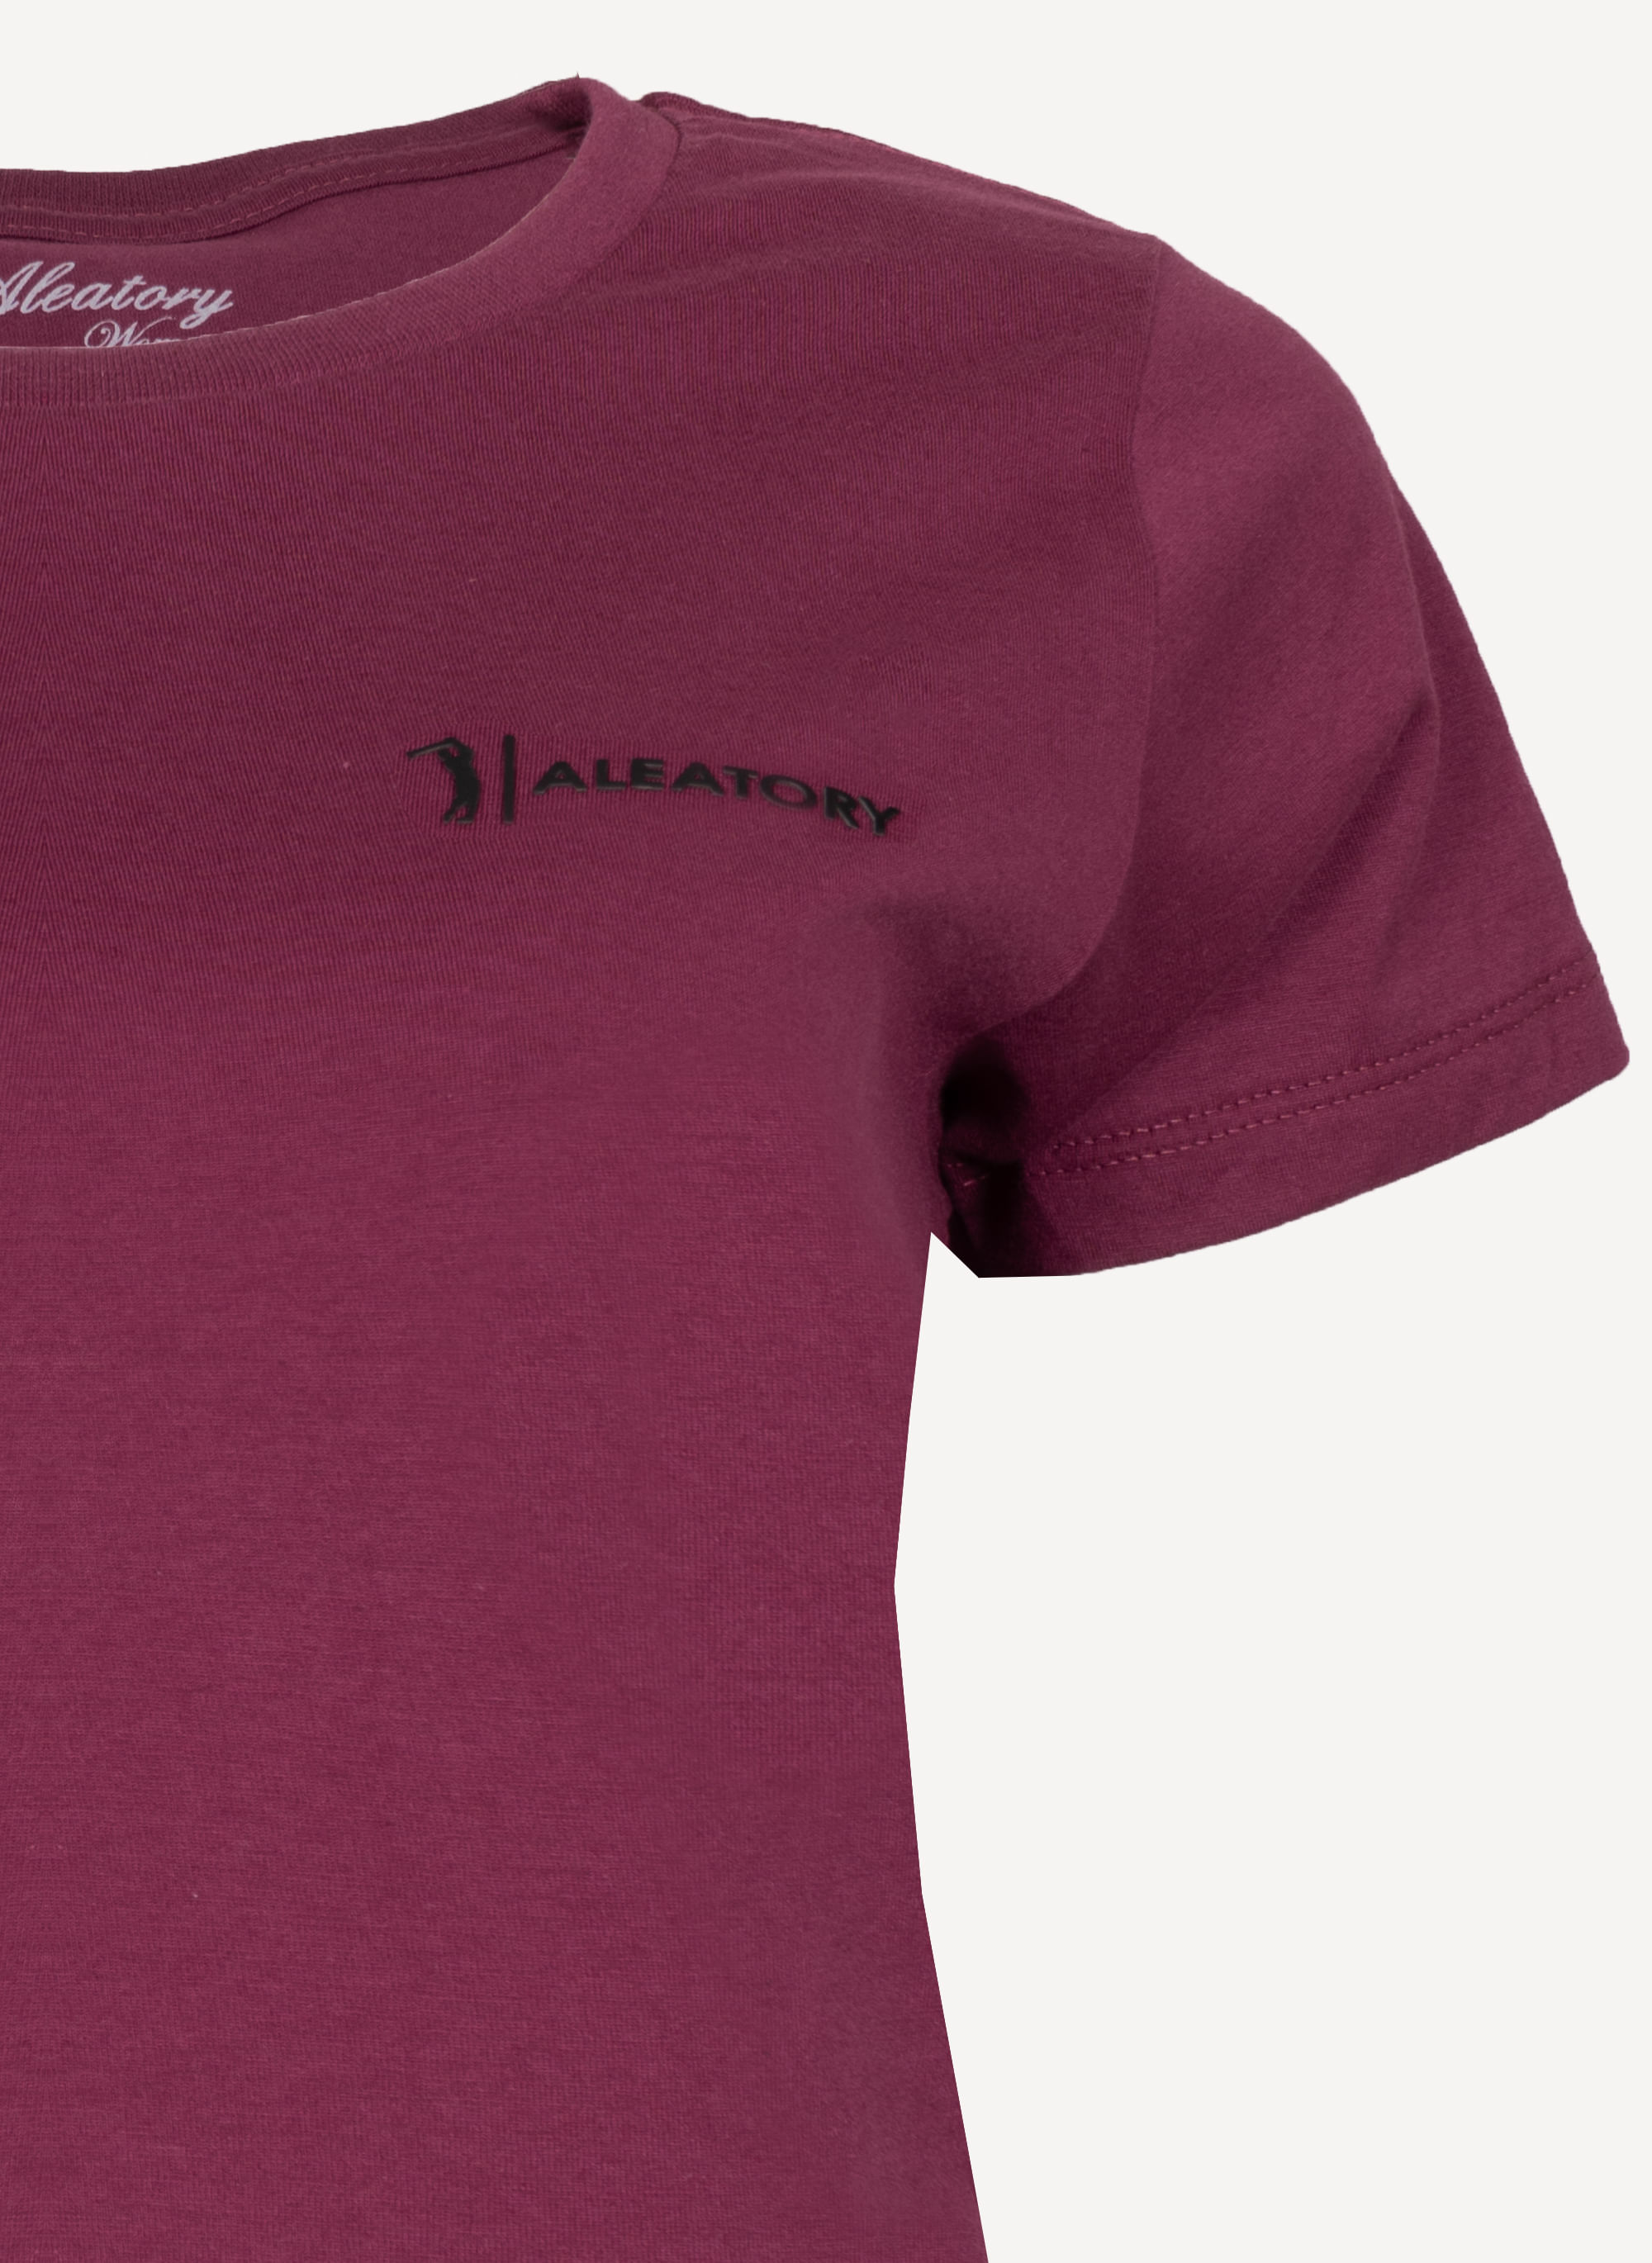 Camiseta-Feminina-Aleatory-Estampada-Fine-Vinho-Vinho-P